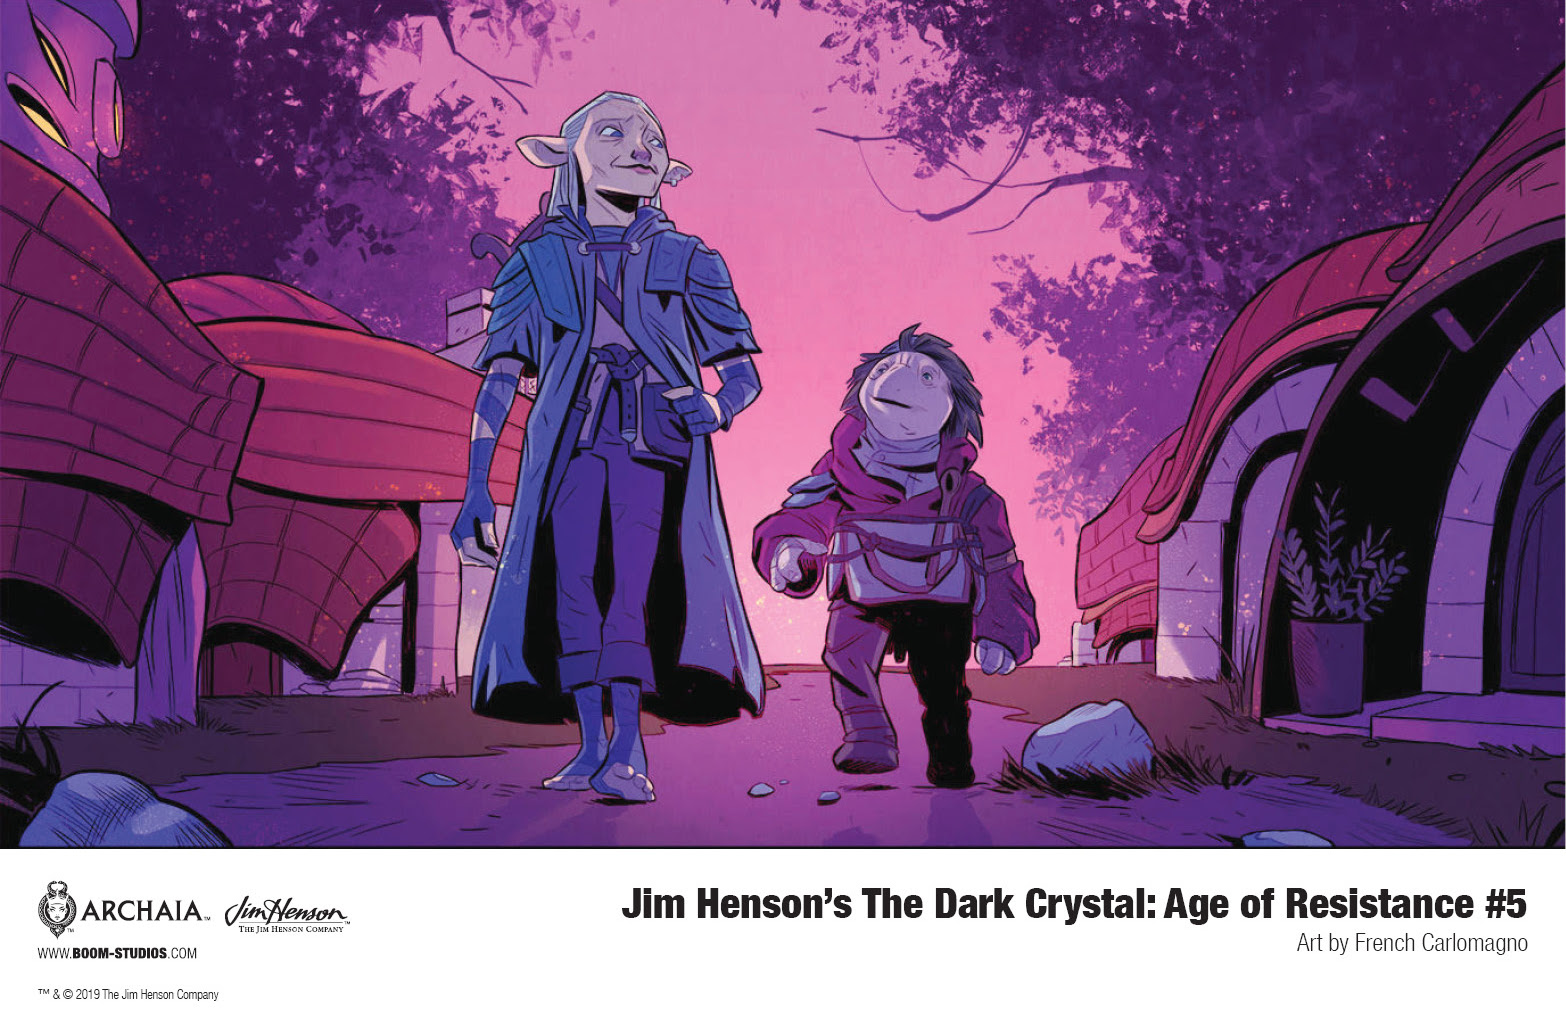 Jim Henson's The Dark Crystal: Age of Resistance #5